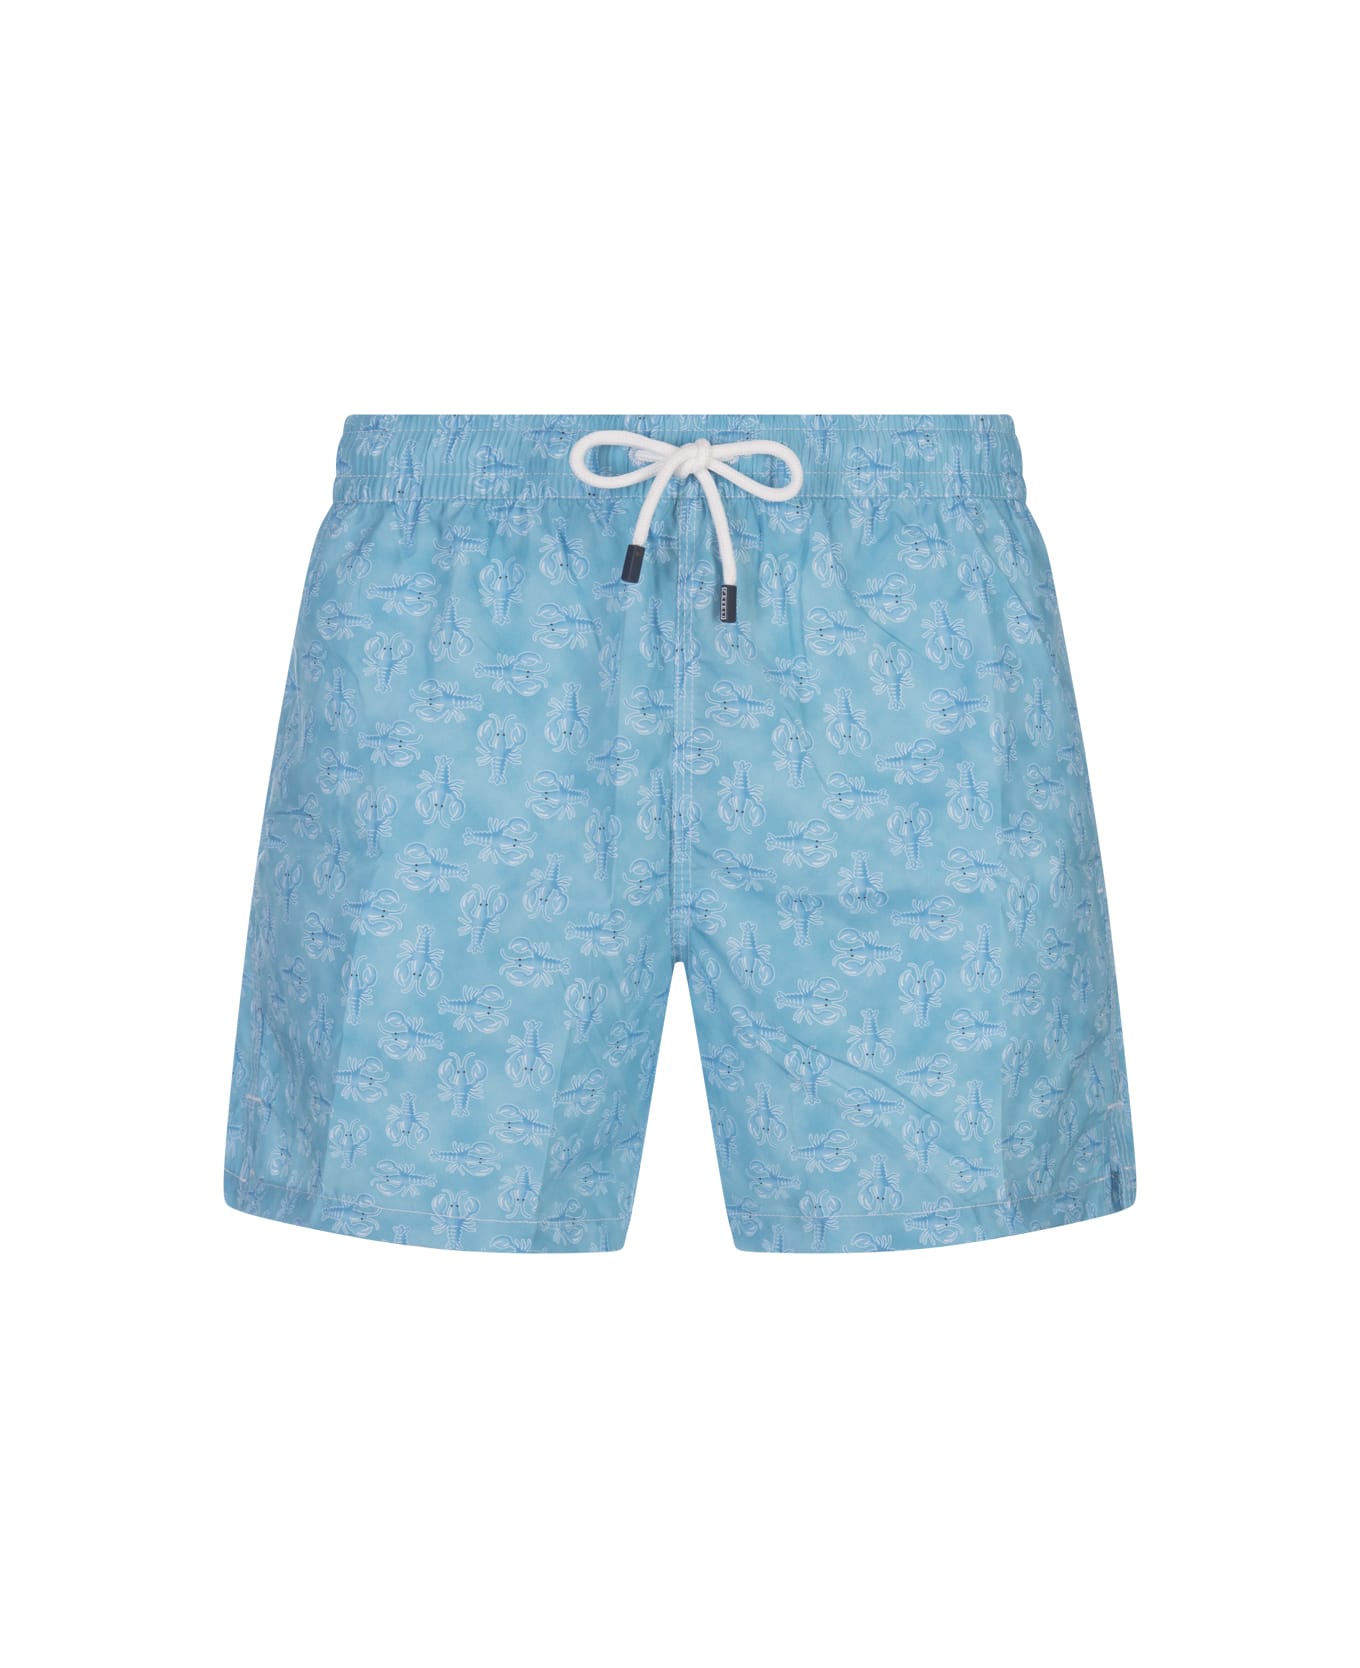 Fedeli Light Blue Swim Shorts With Lobster Pattern - Blue スイムトランクス